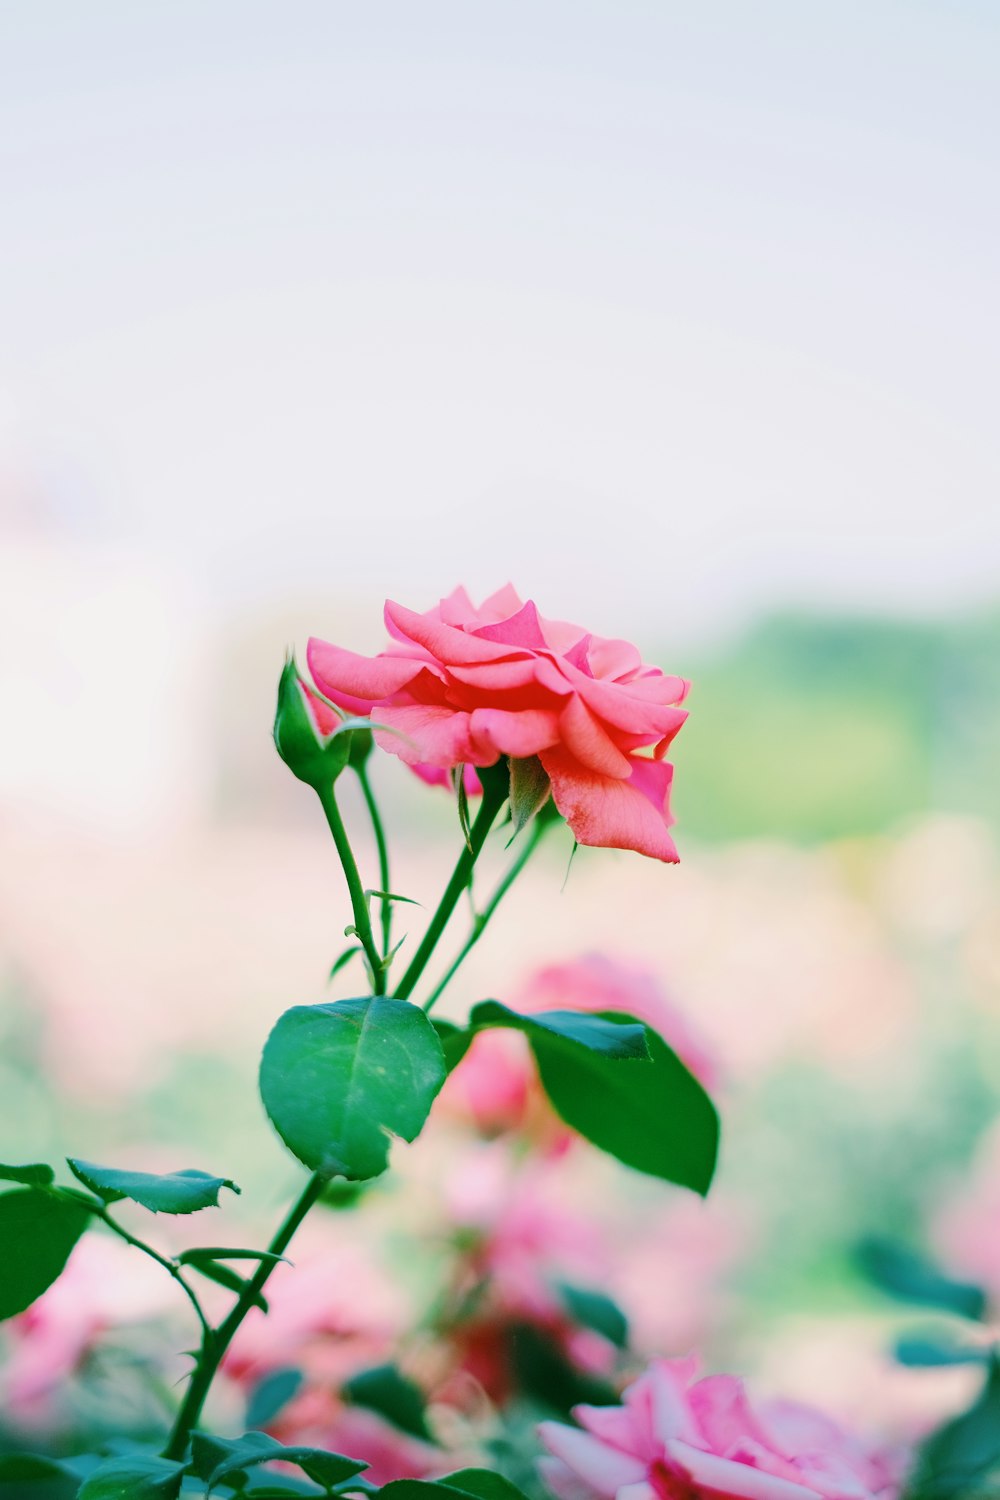 una rosa rosa en una planta